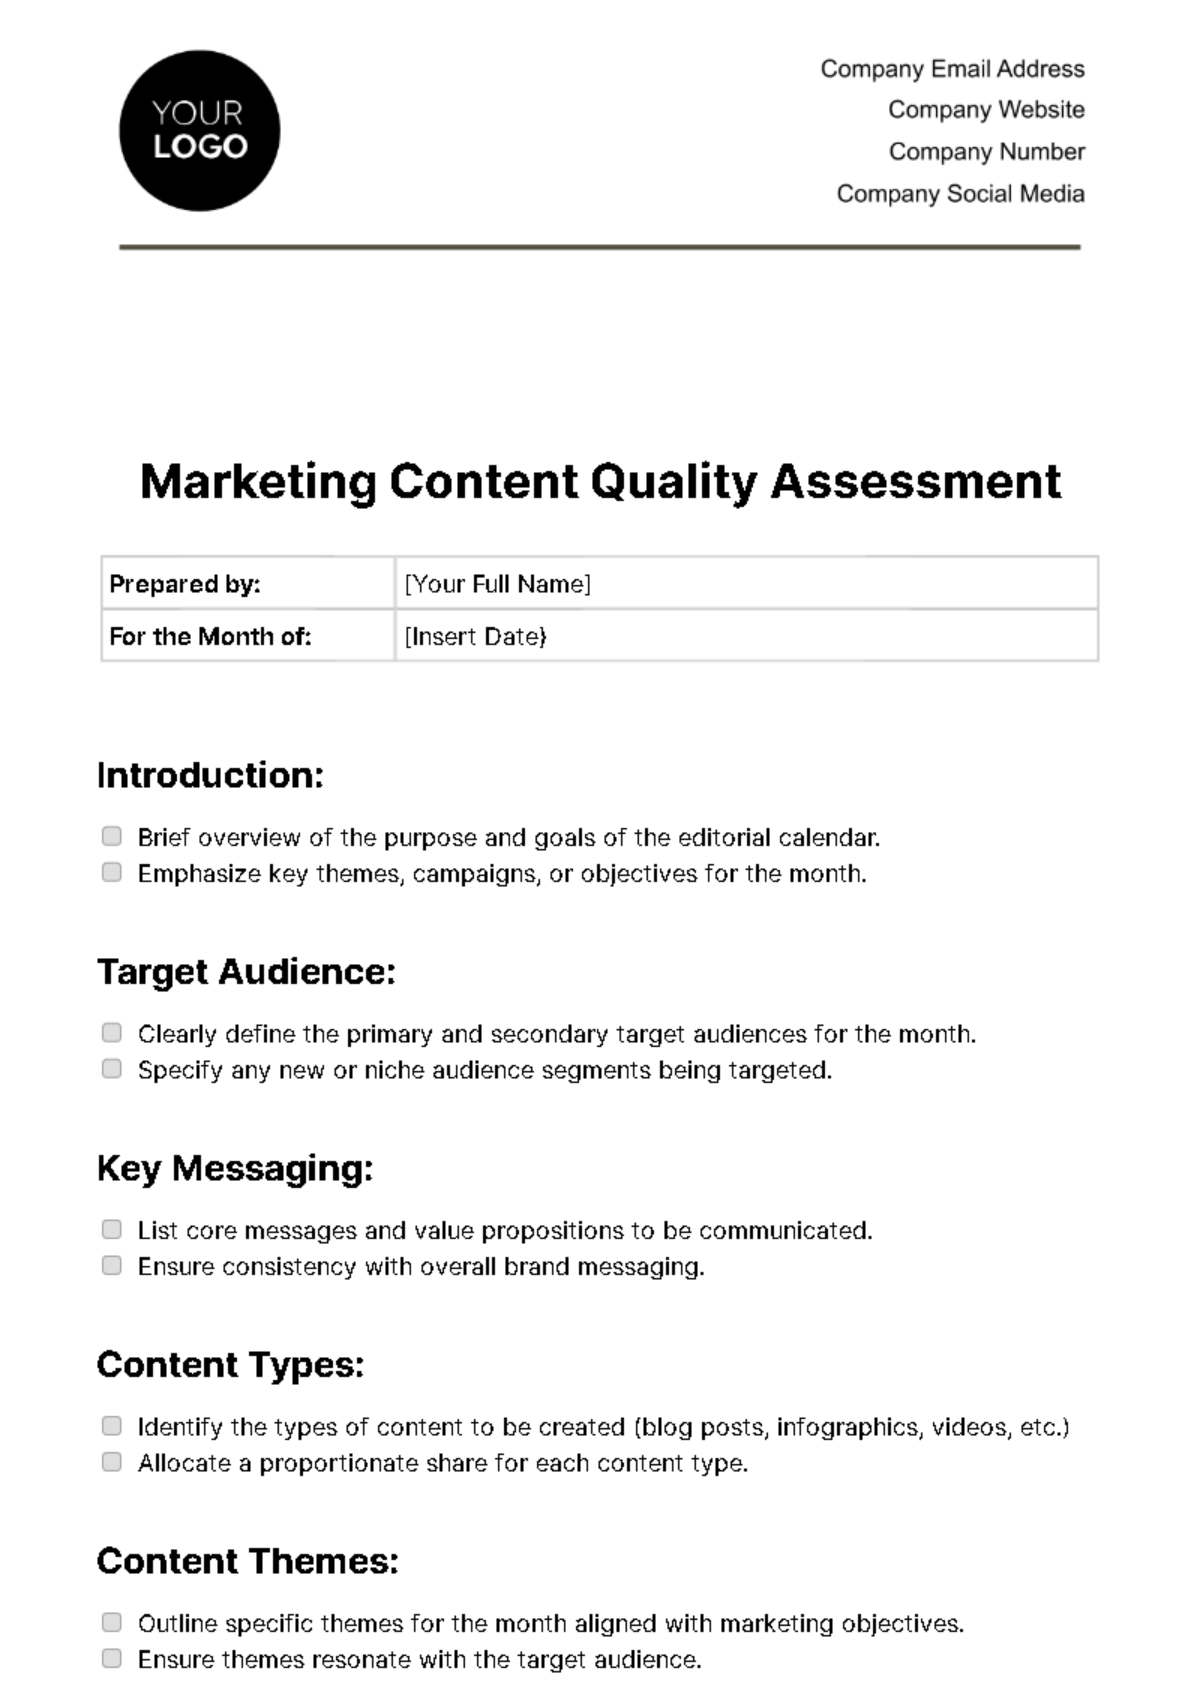 Free Marketing Content Editorial Calendar Checklist Template